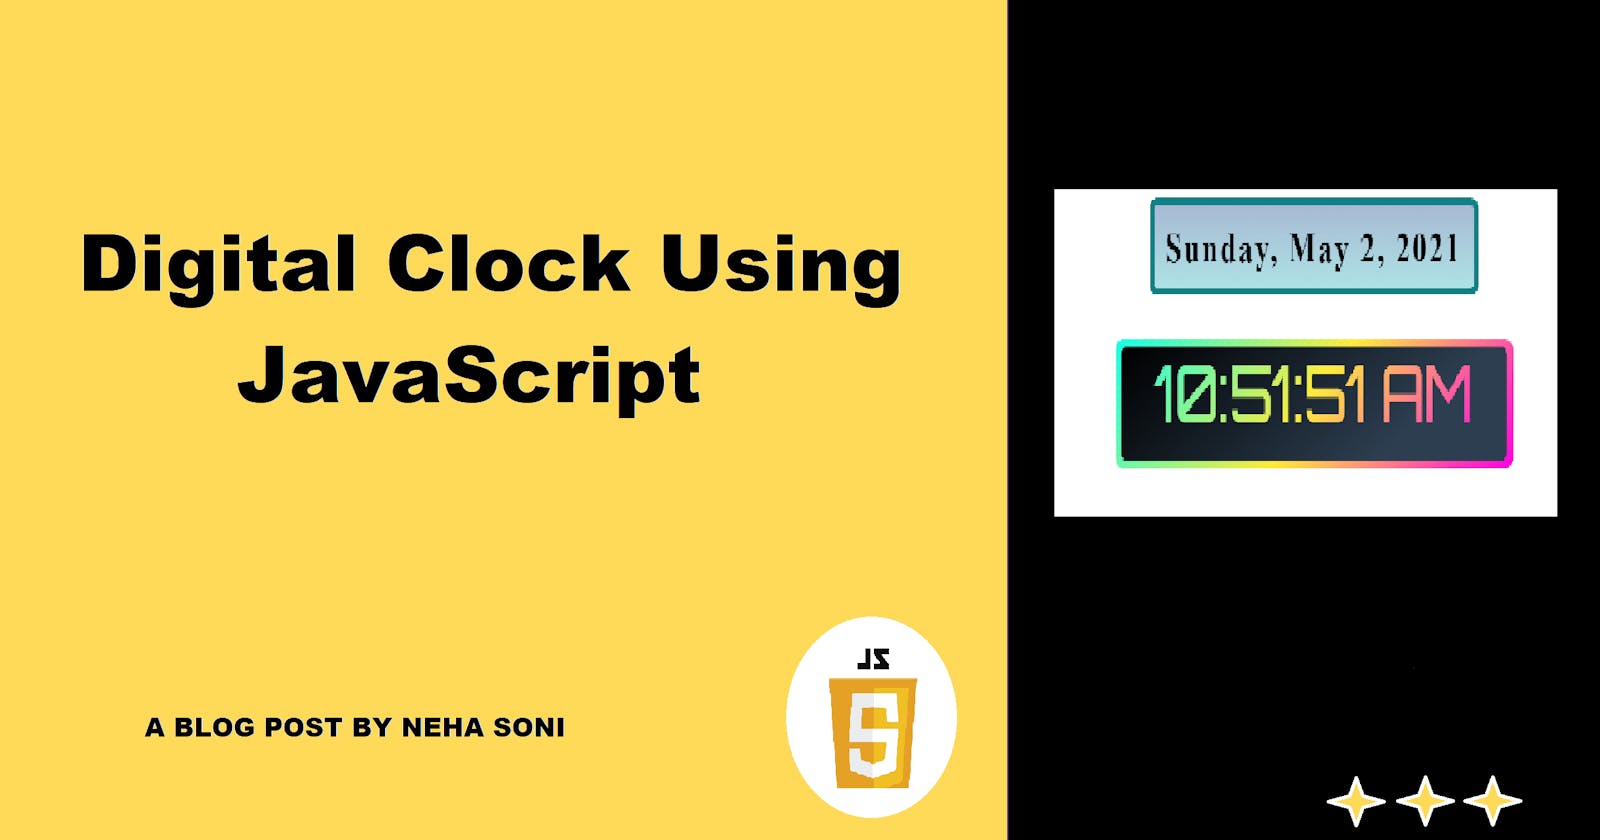 Digital Clock using JavaScript